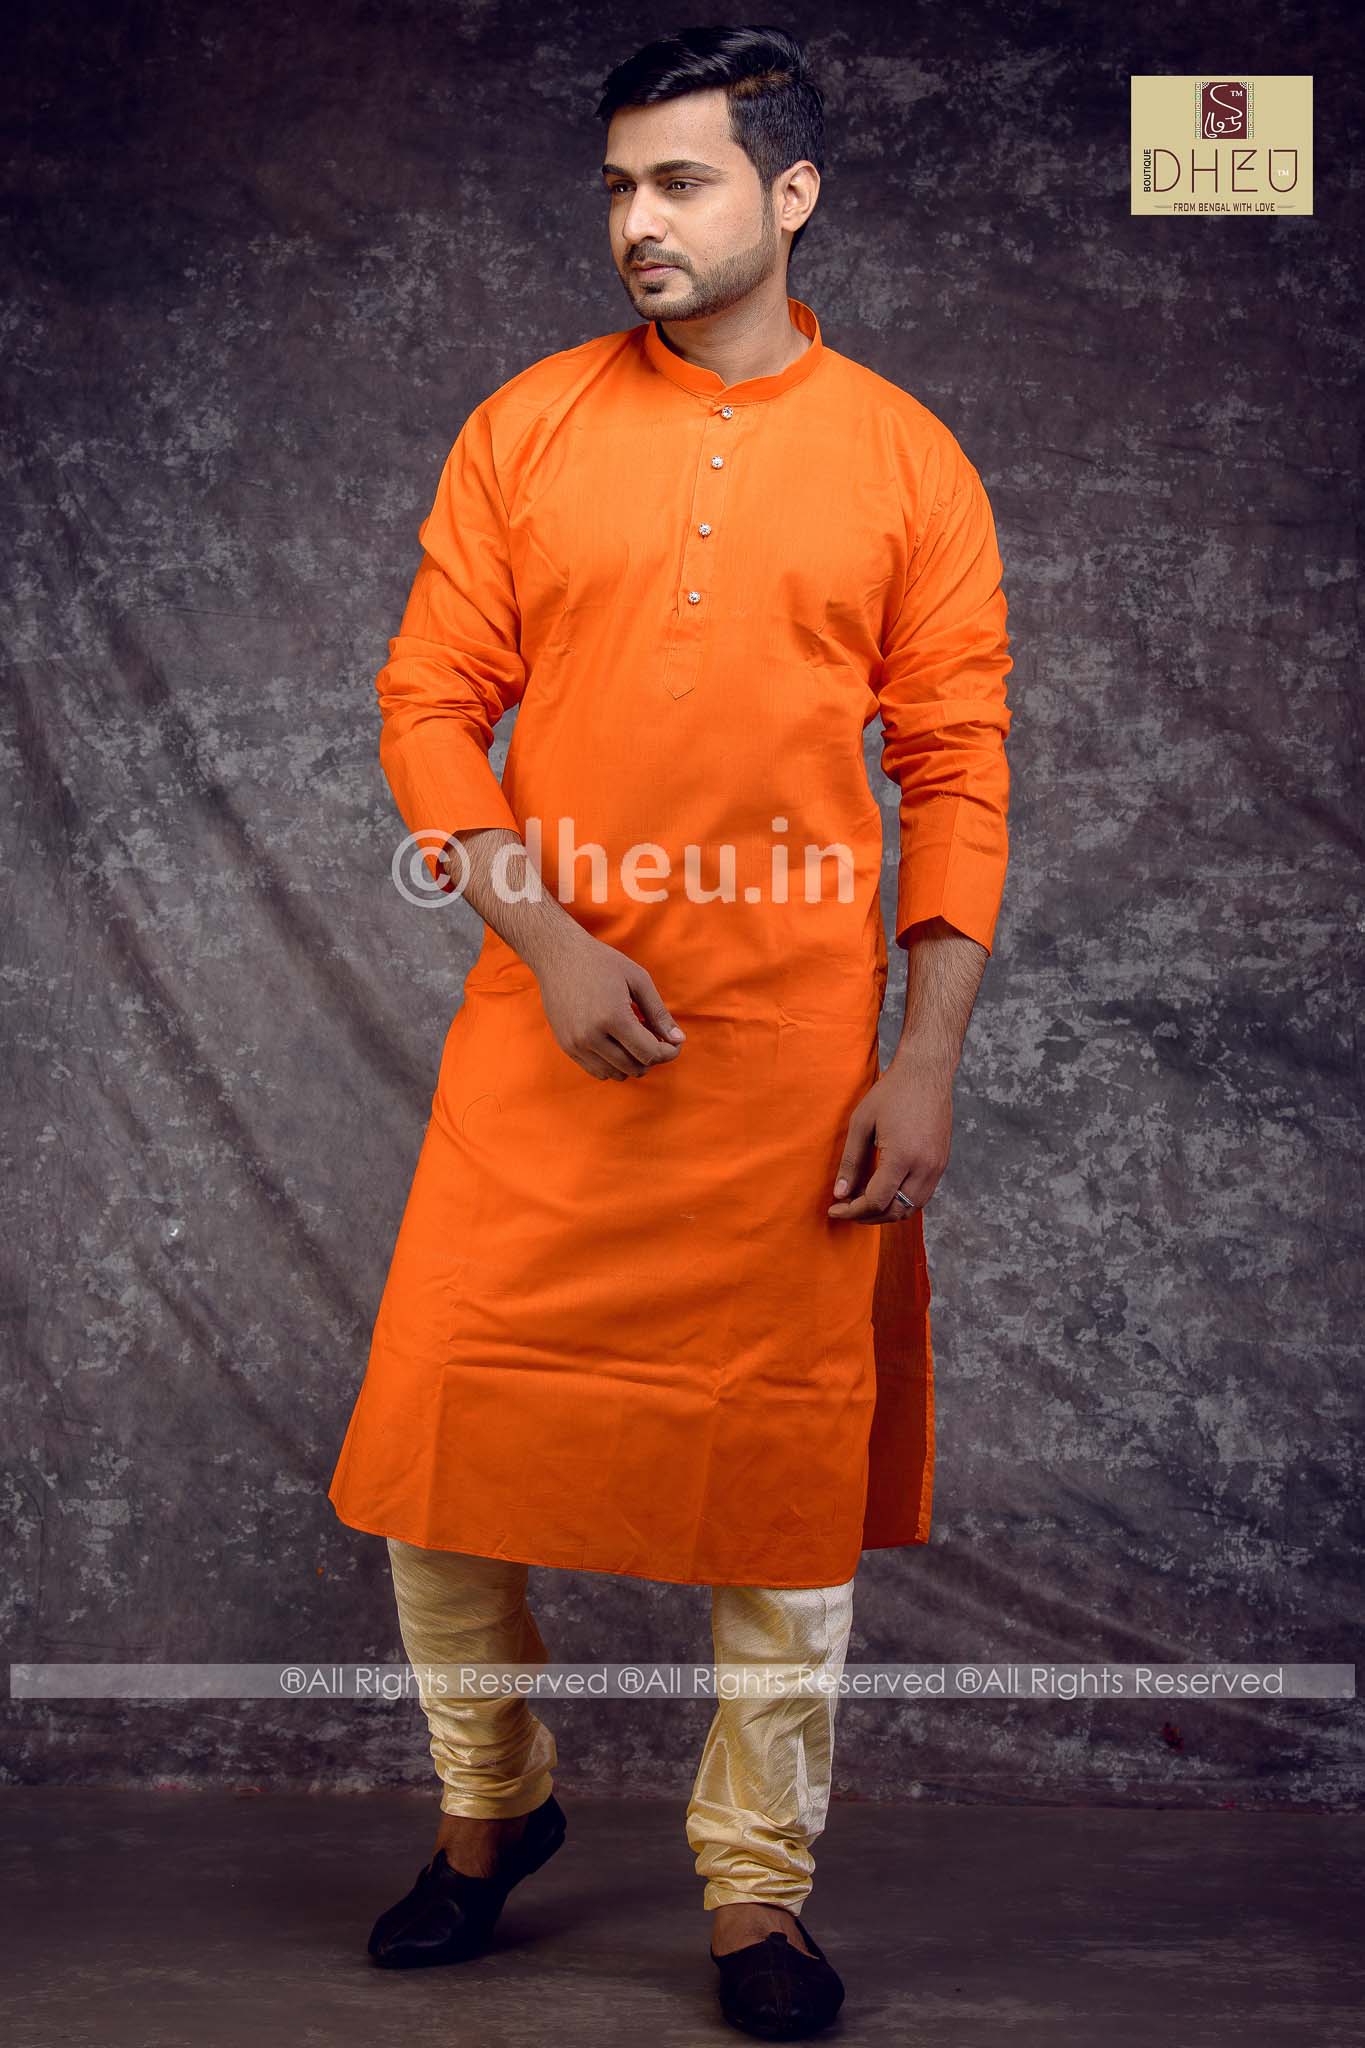 Vibrant orange designer kurta at low cost in dheu.in